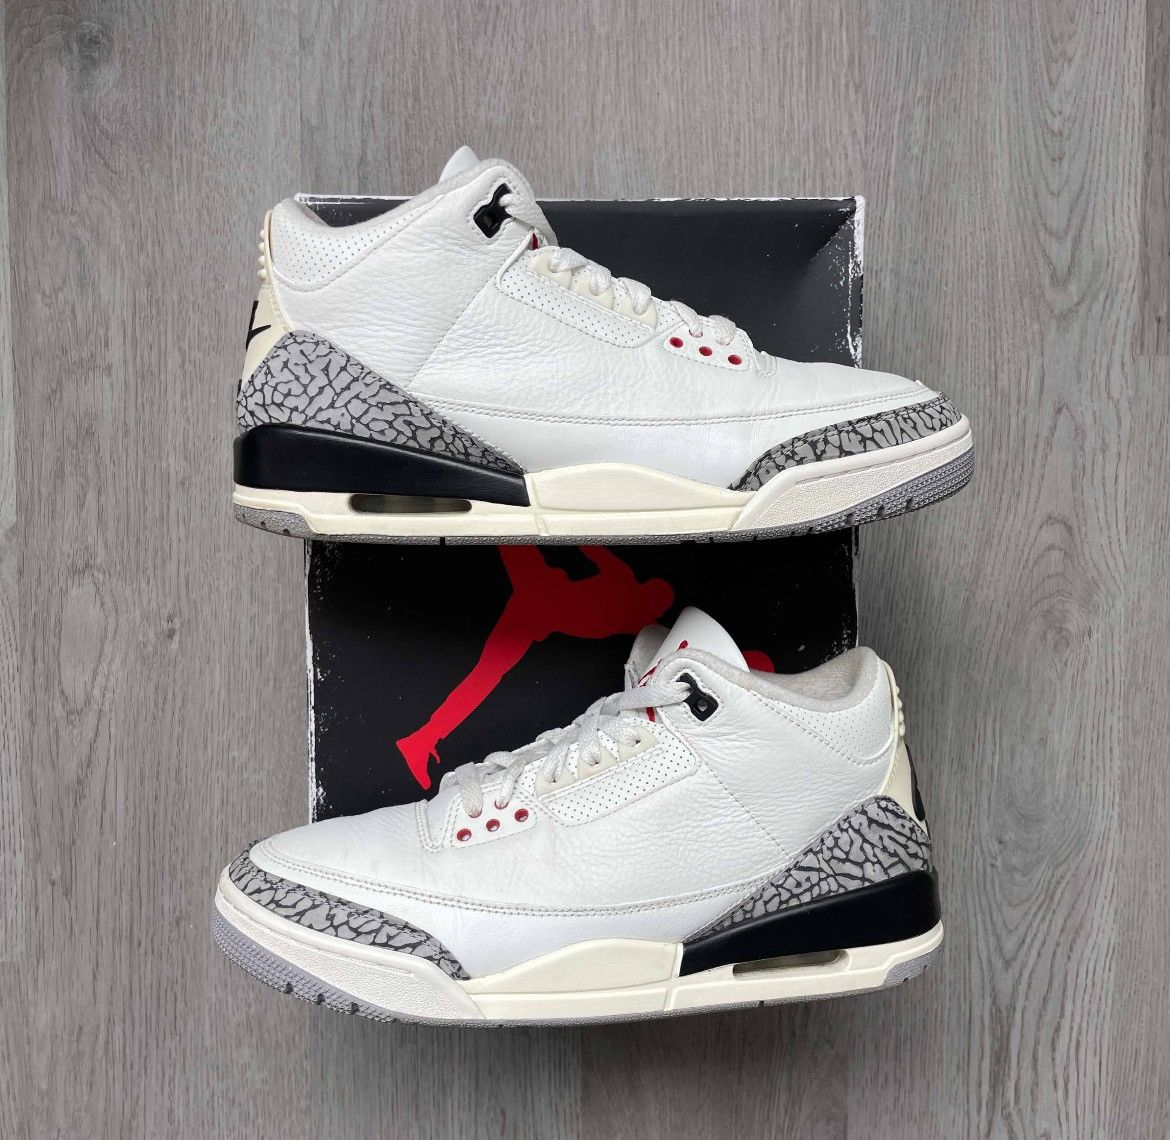 Pre-owned Jordan Nike Size 9.5 - Nike Air Jordan 3 Retro White Cement Reimagine Shoes